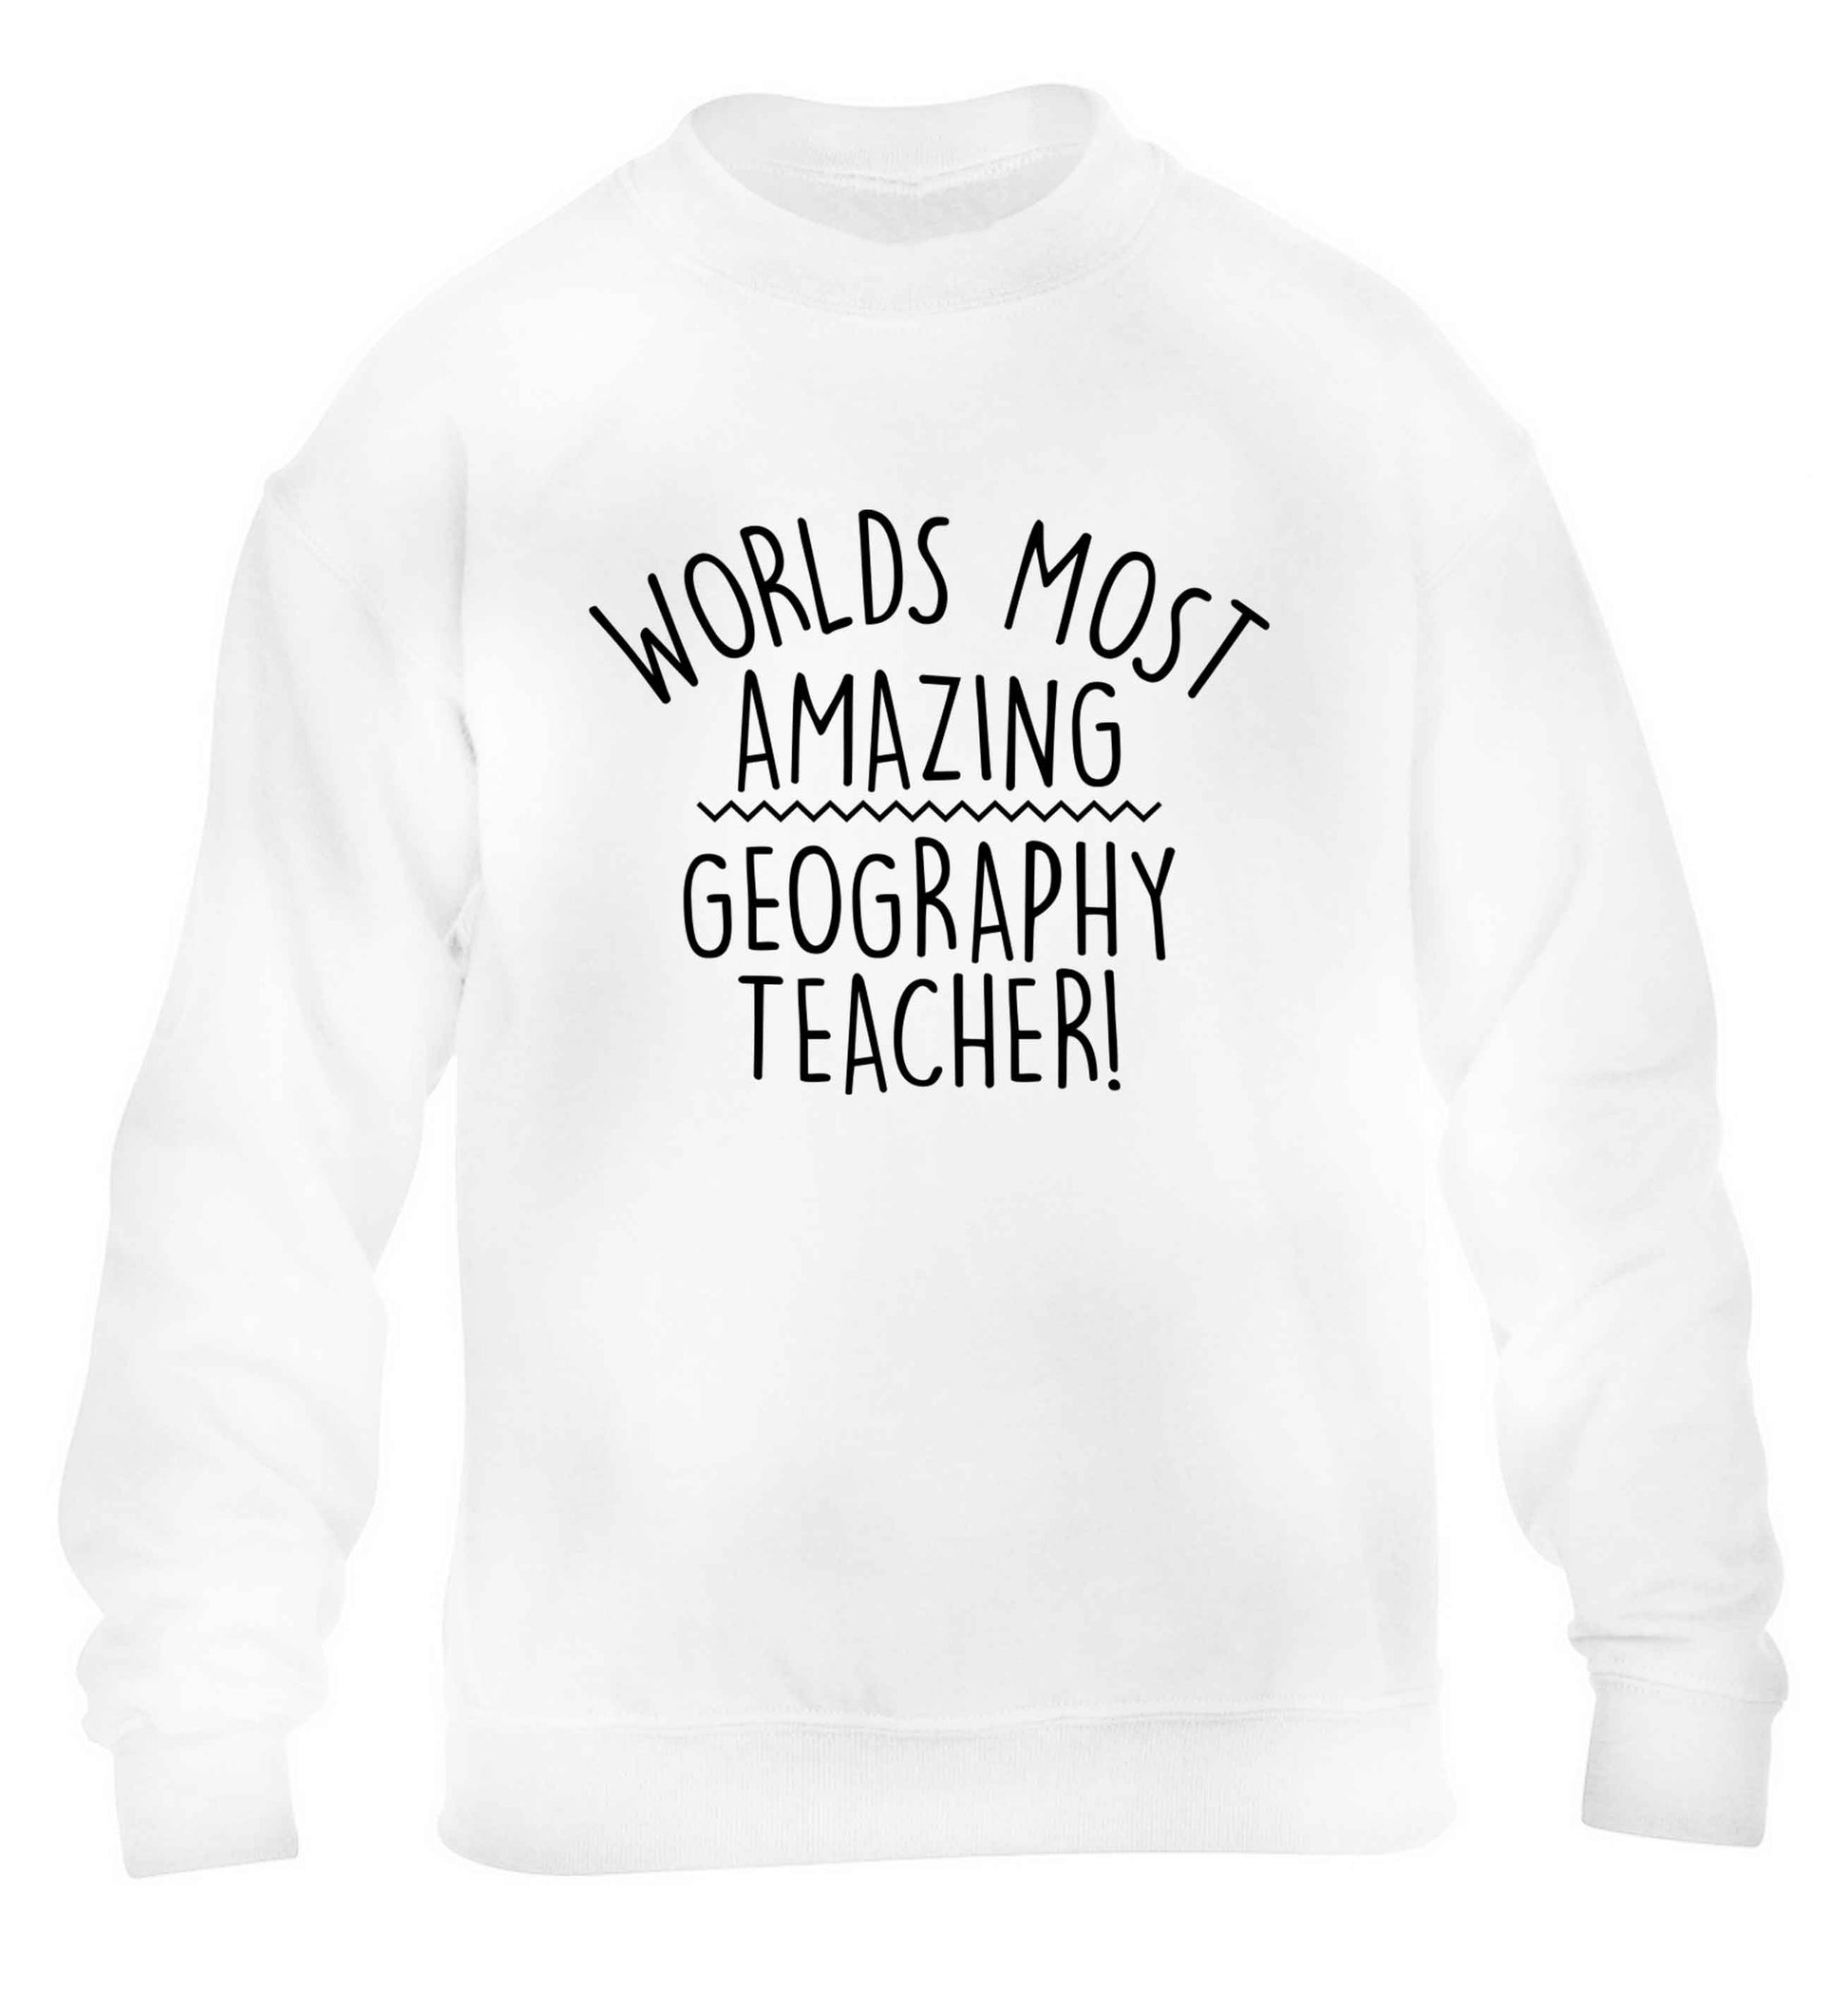 Worlds most amazing geography teacher children's white sweater 12-13 Years